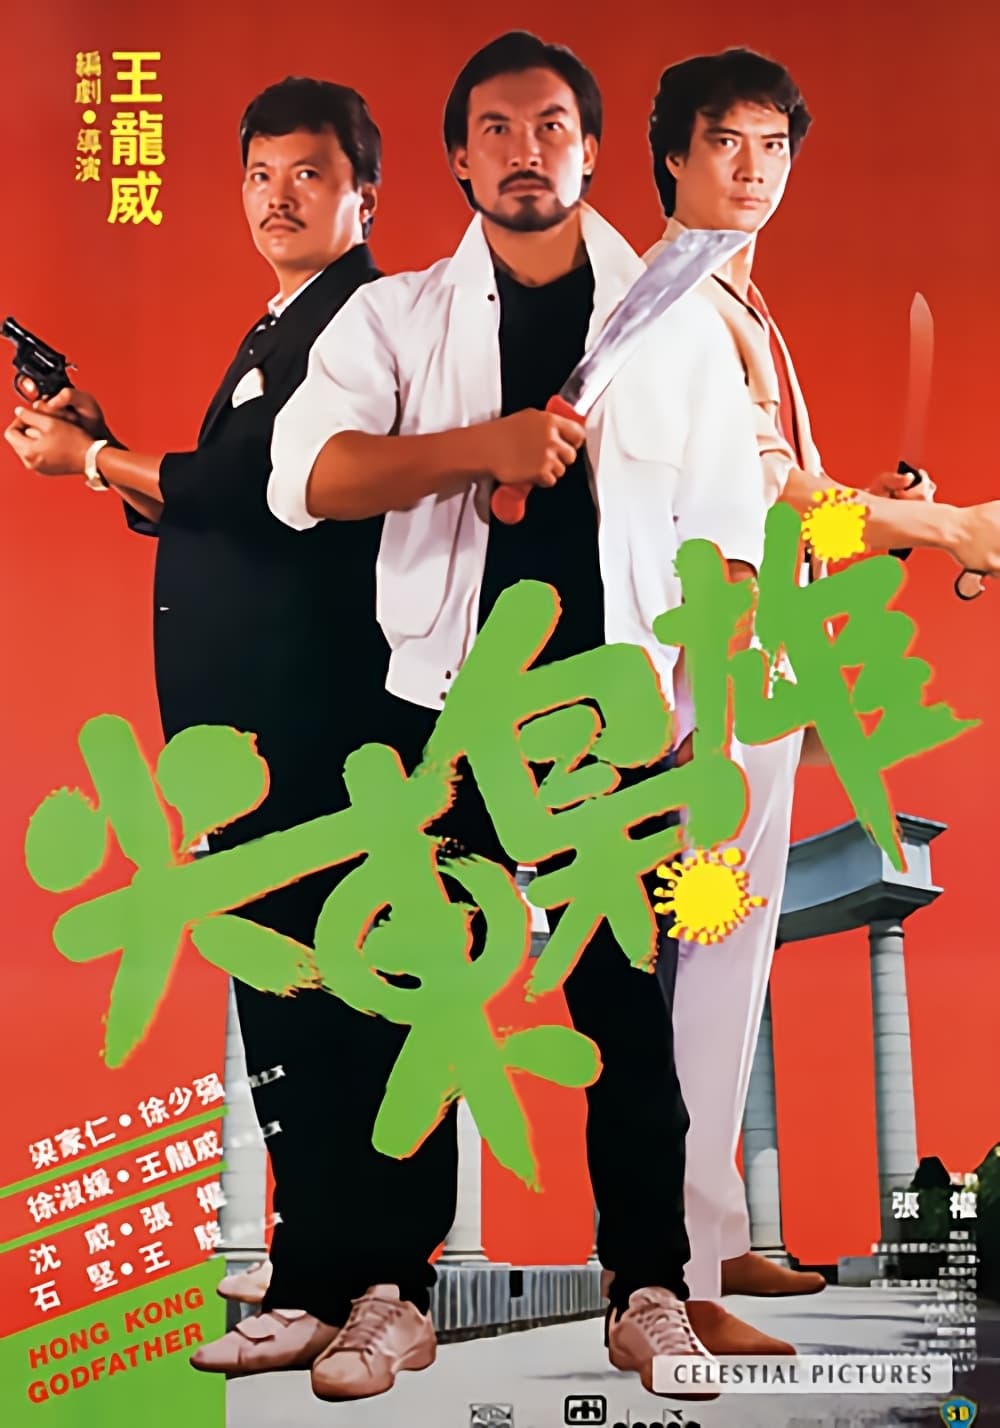 Hong Kong Godfather (1985)